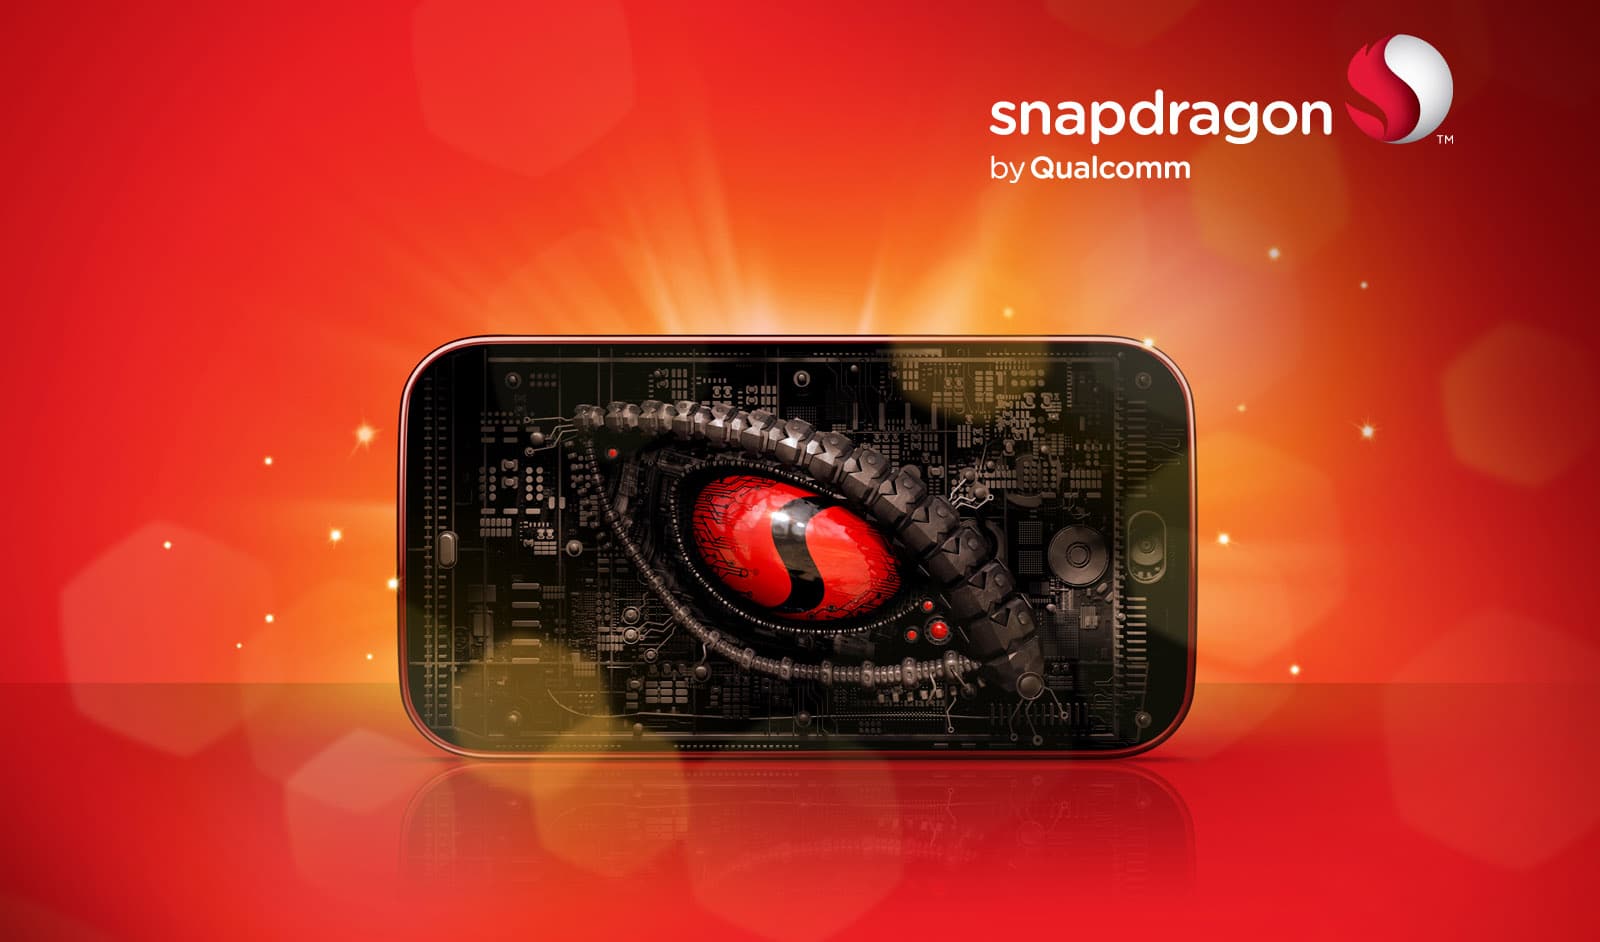 Snapdragon-801